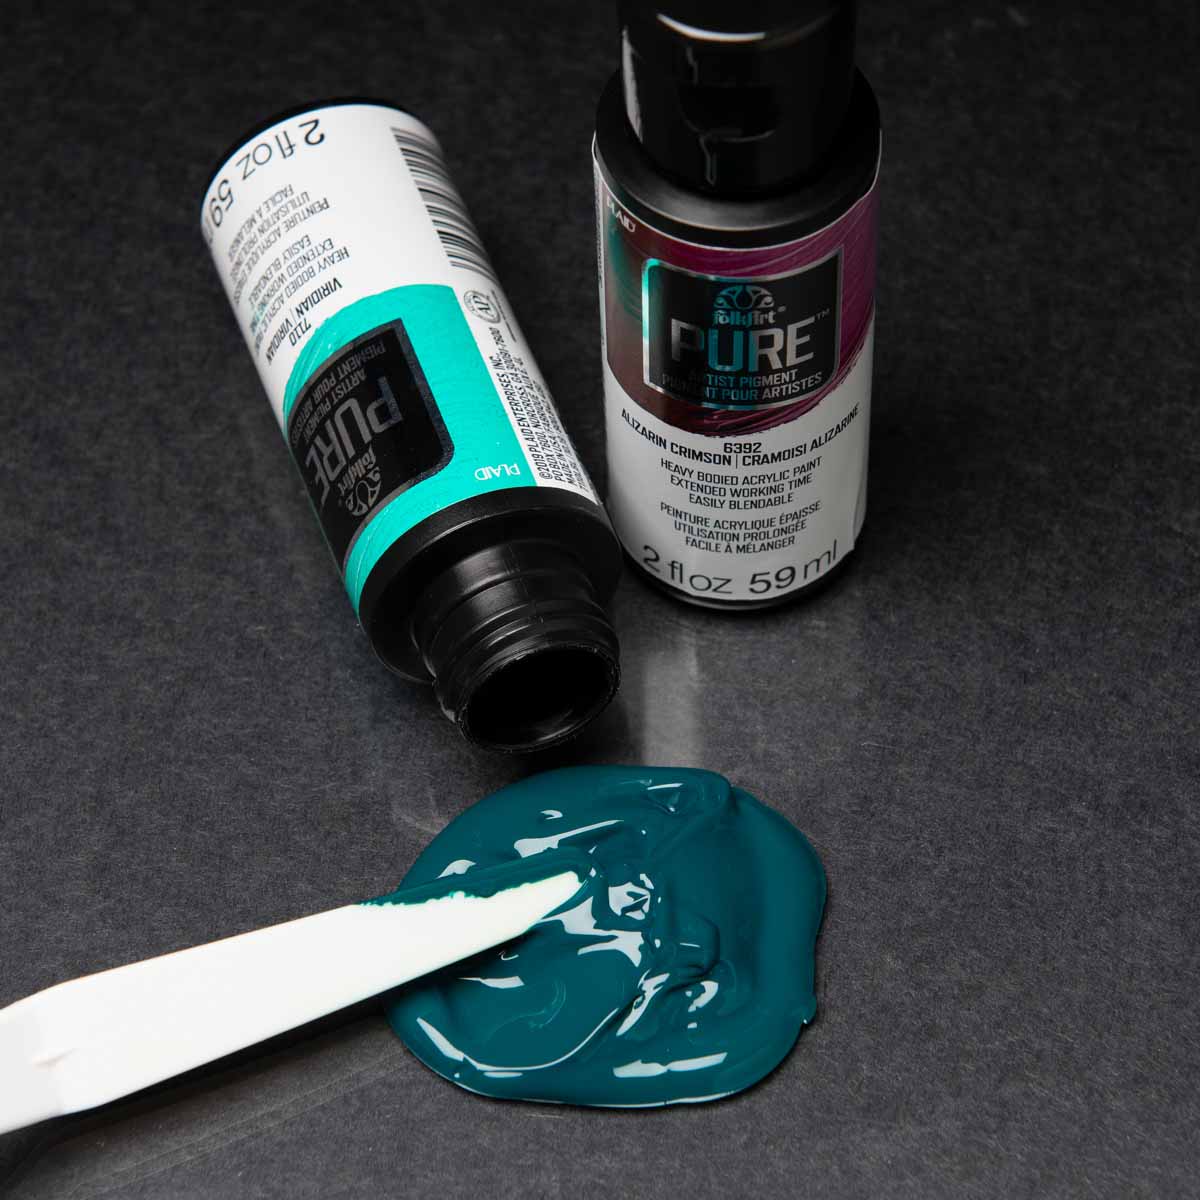 3pc FolkArt One Stroke Pure Artist Pigment Palette/Painting Knife Set